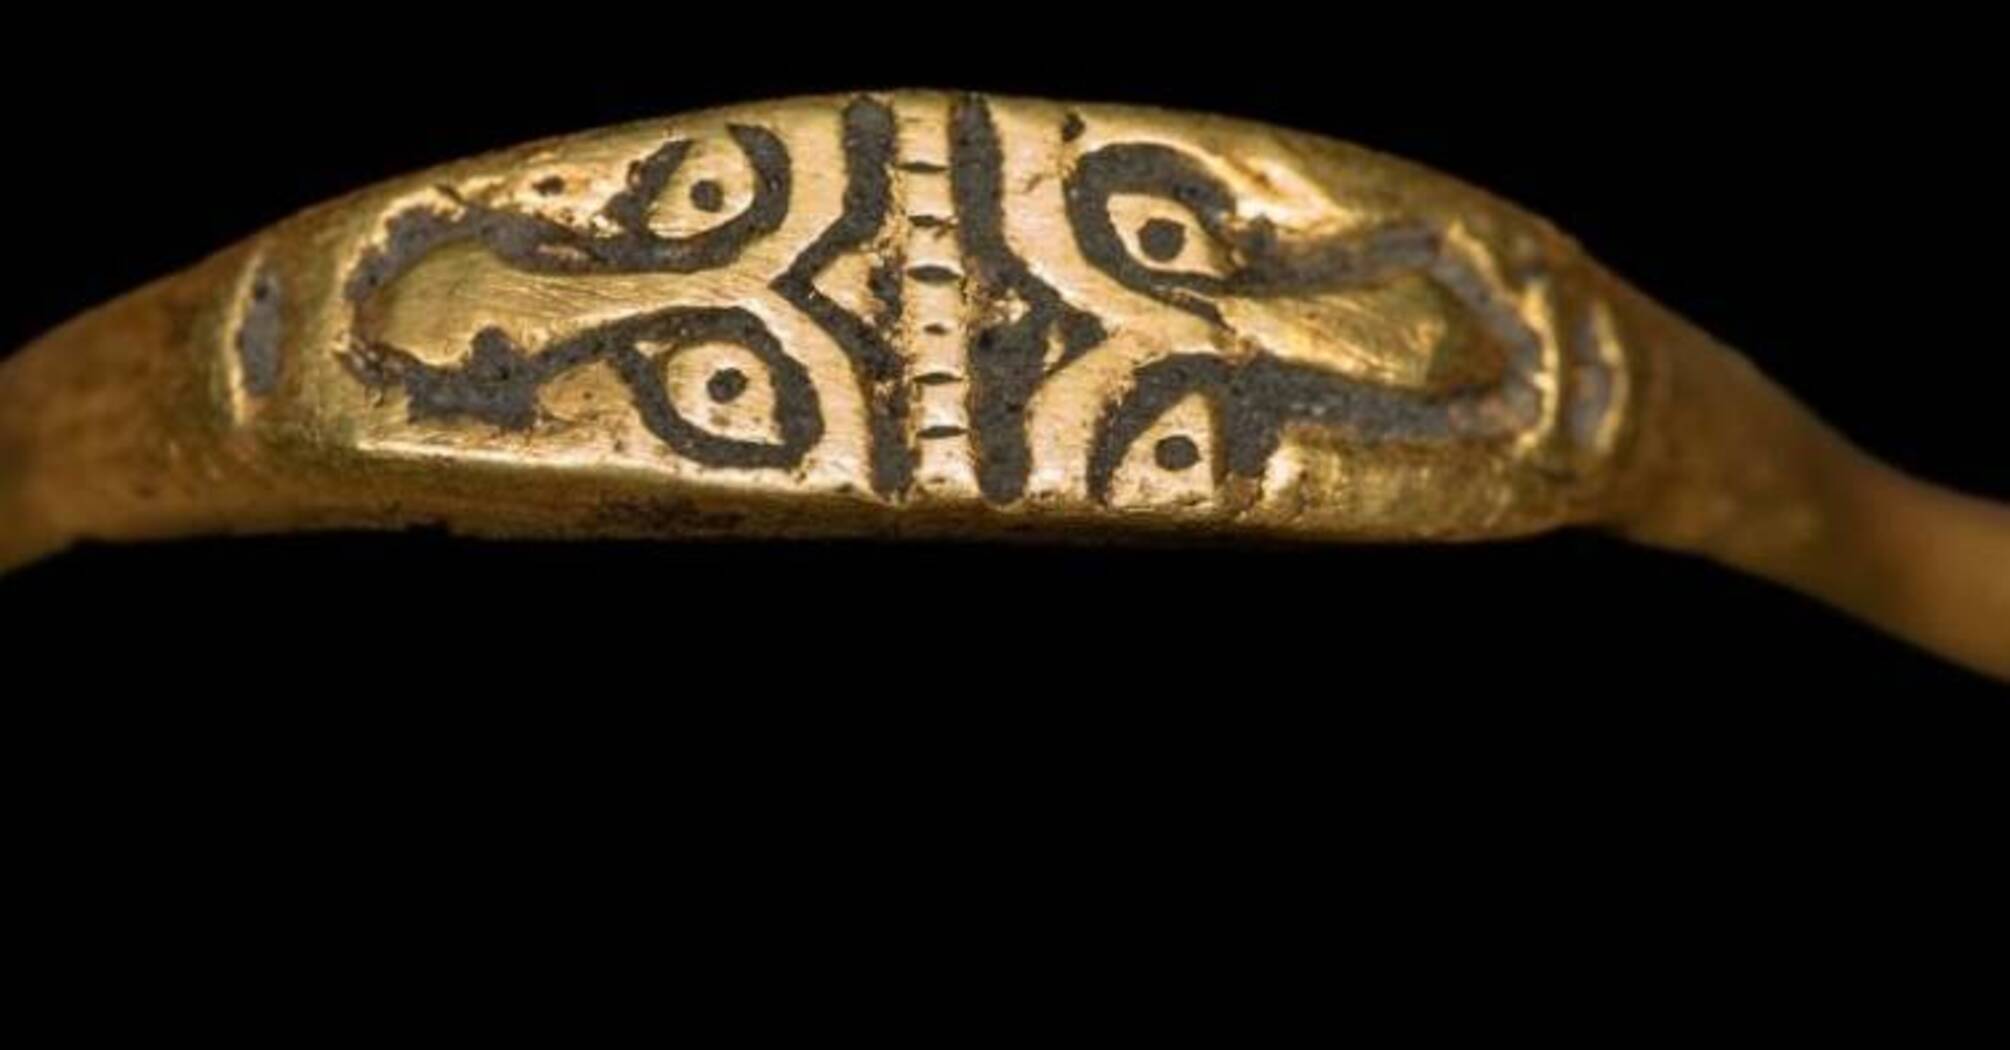 Unique gold ring found in Poland